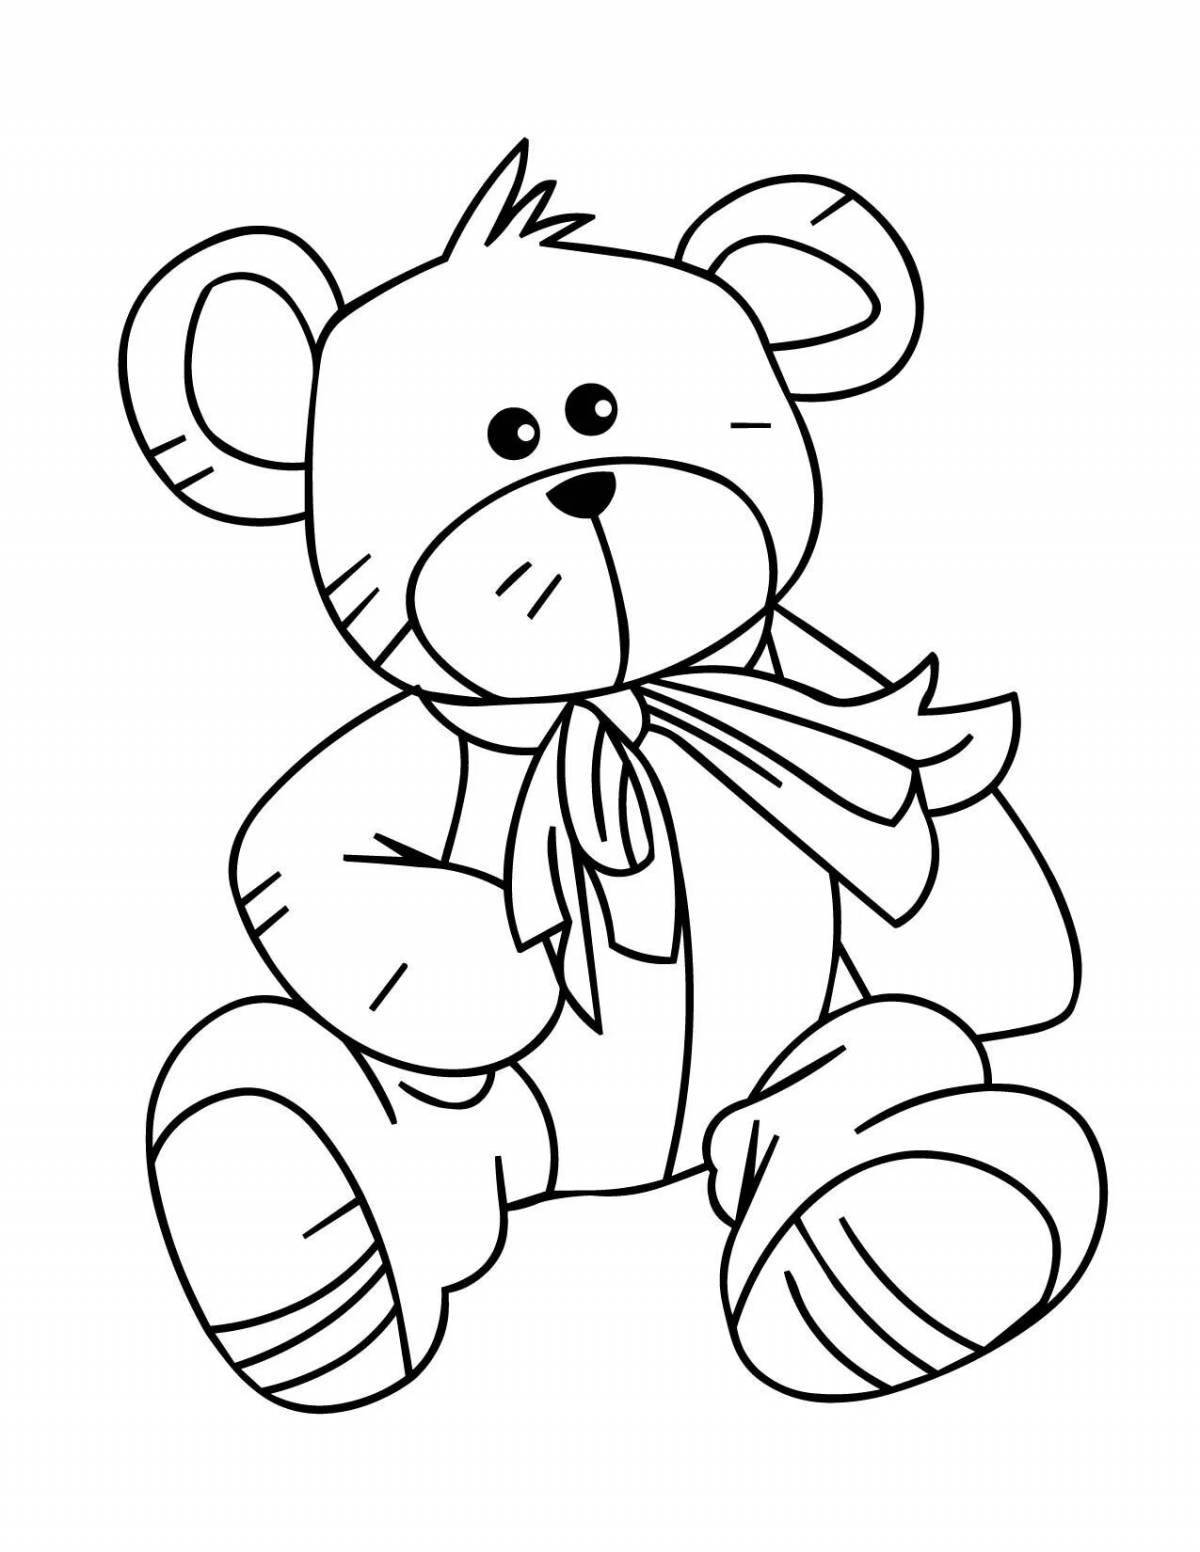 Coloring book loving teddy bear